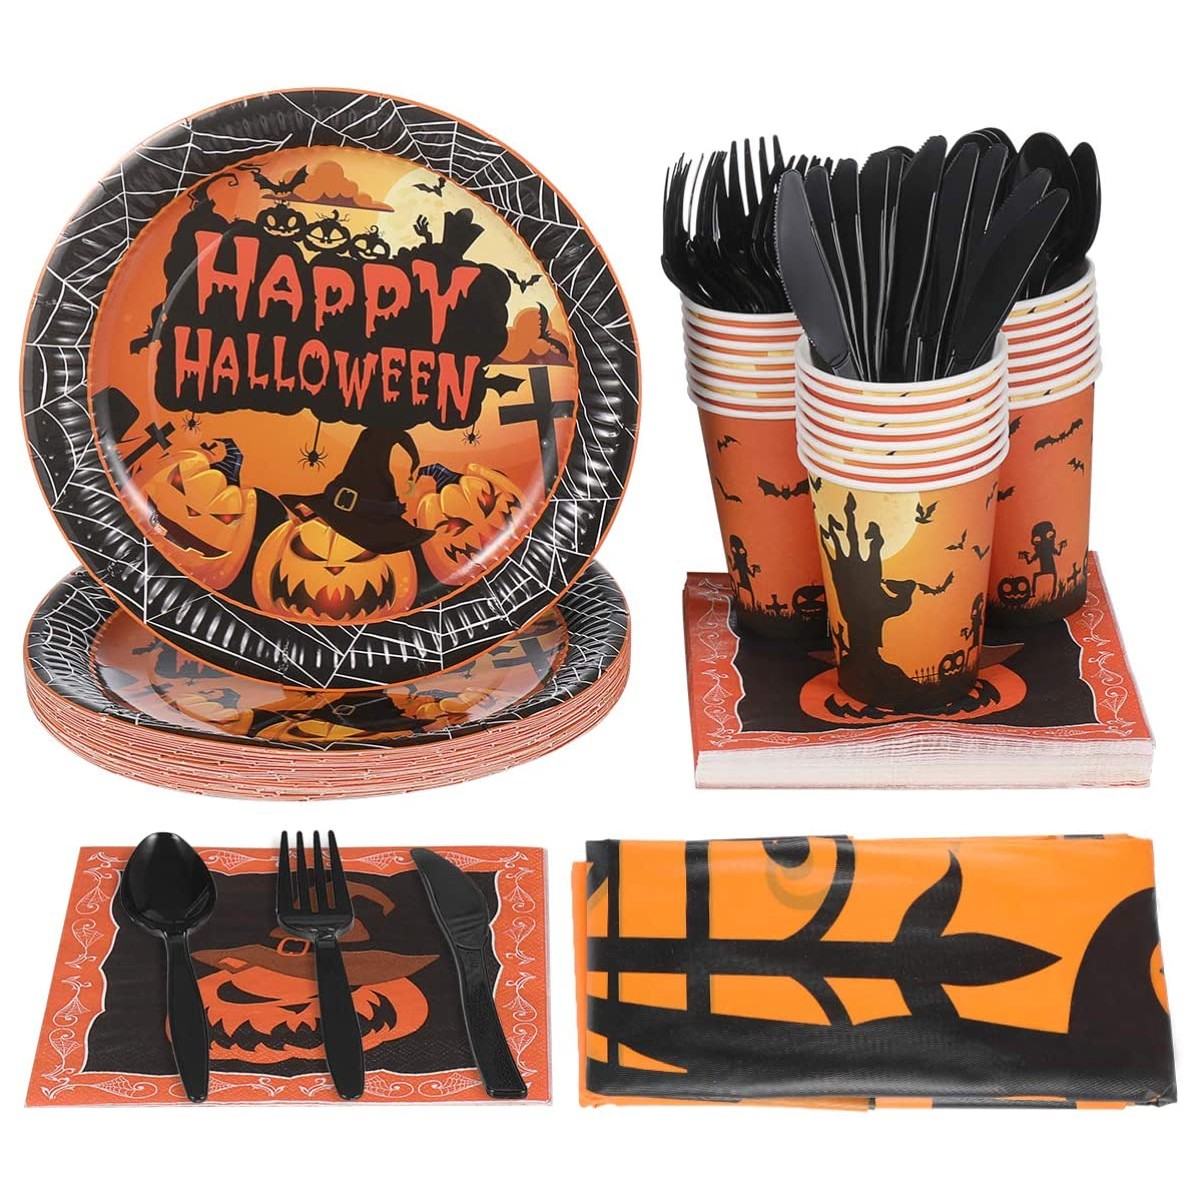 Kit 24 persone Happy Halloween, per allestimenti terrificanti